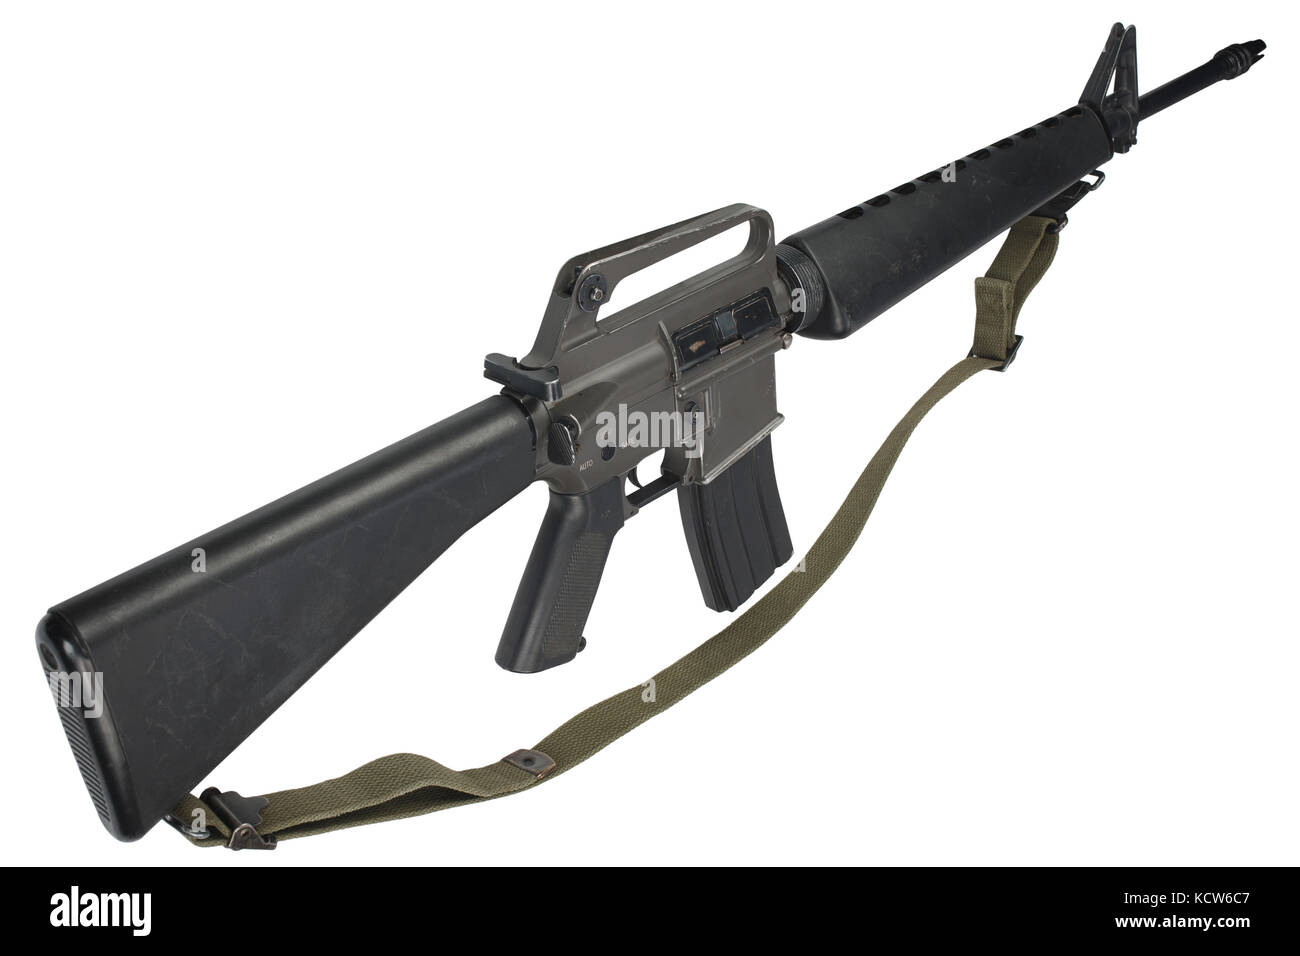 M16 rifle with Vietnam War period Stock Photo